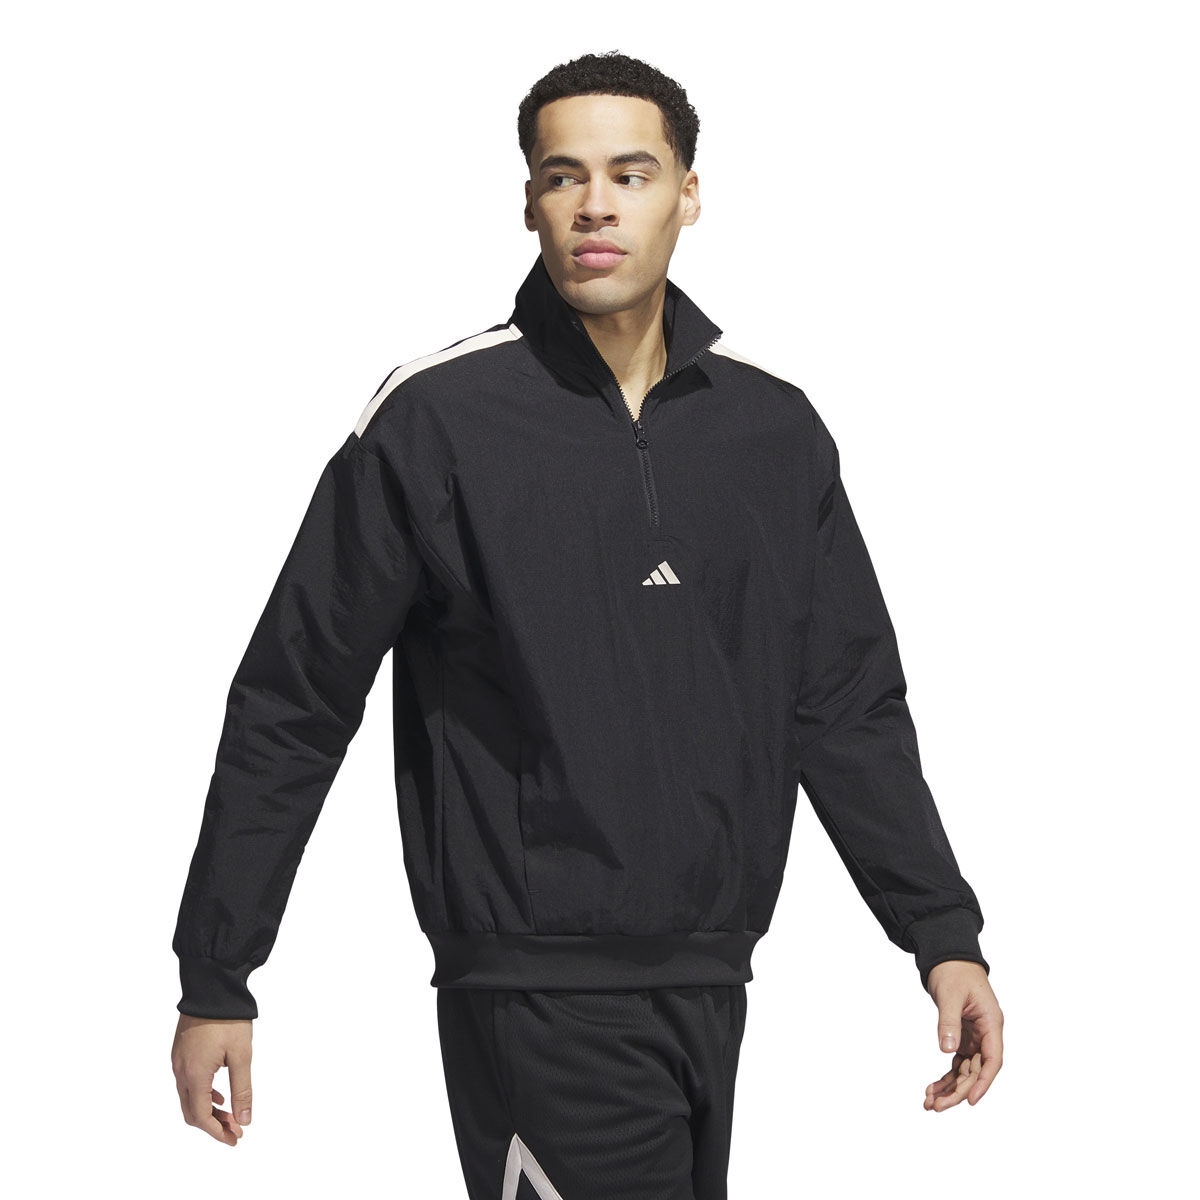 Adidas Men's Sport ID Jacket Running Gym Hoodie Woven Top Black cw5032